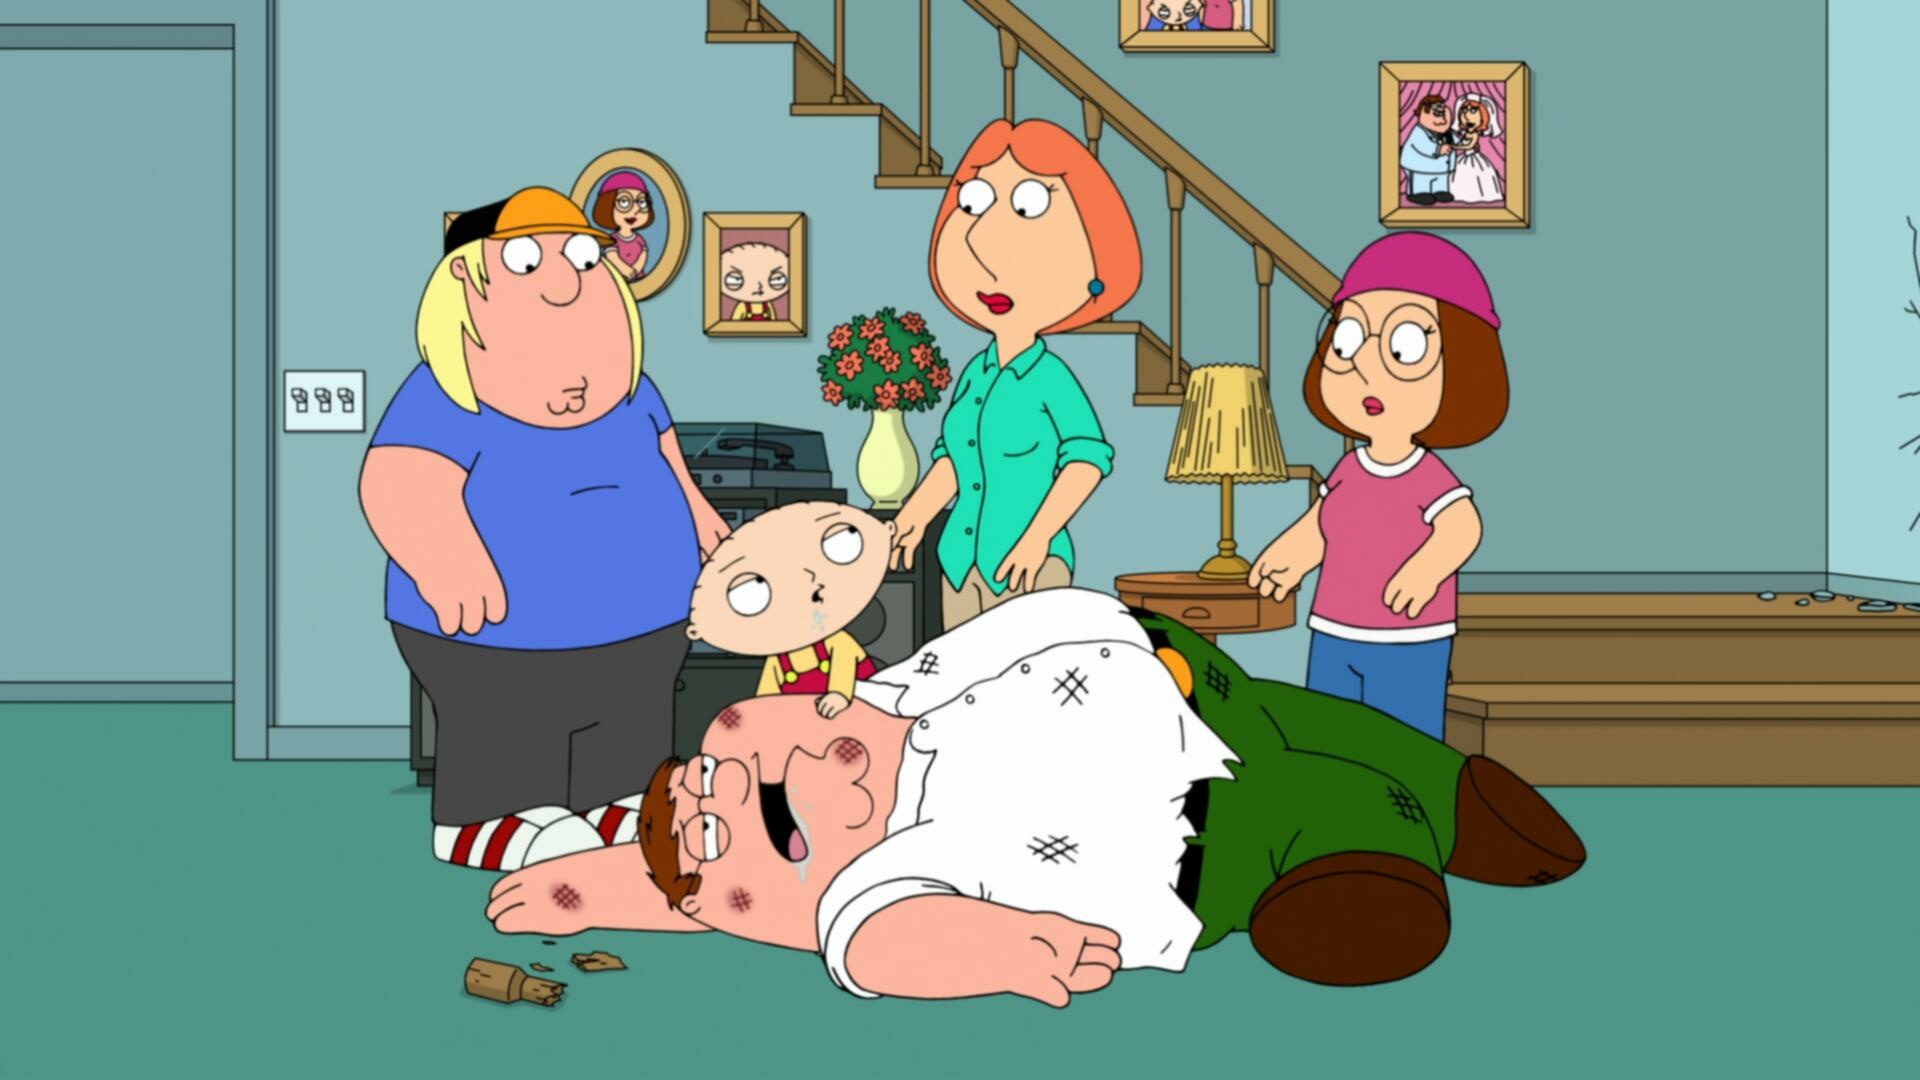 Family Guy S22E13 Lifeguard Meg 1080p DSNP WEB DL DDP5 1 H 264 NTb TGx